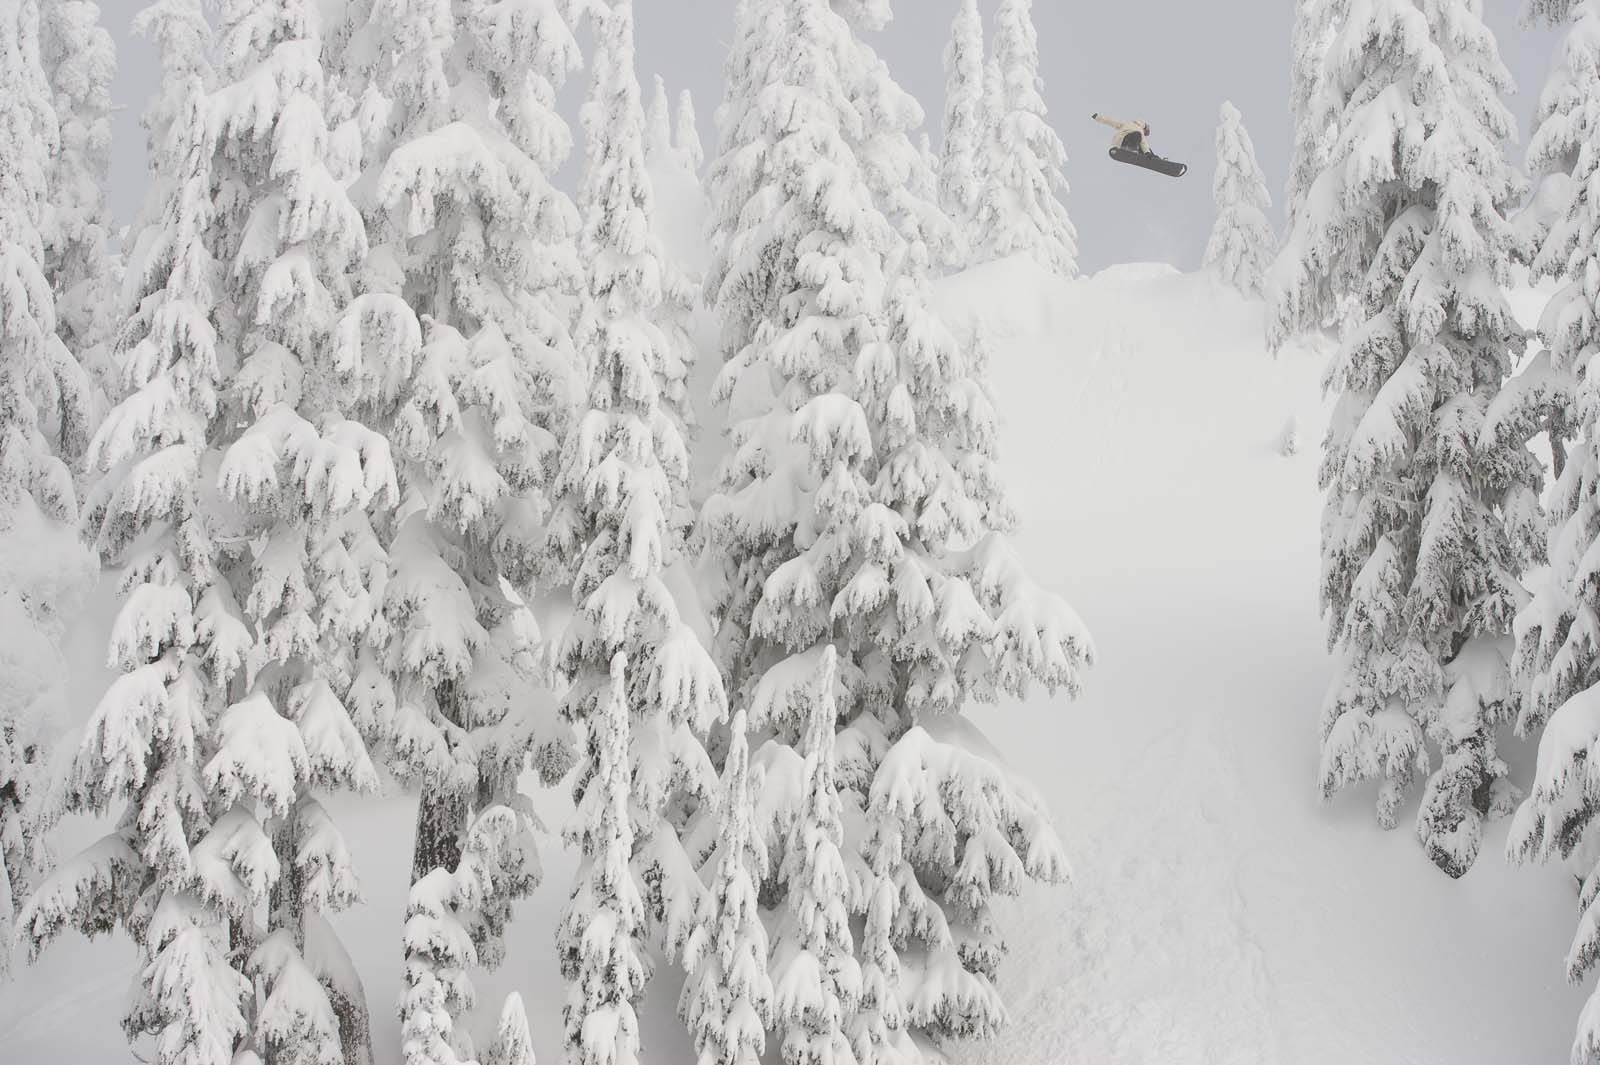 Mark Sollors, professional Burton snowboarder, jumping off snowy mountain.